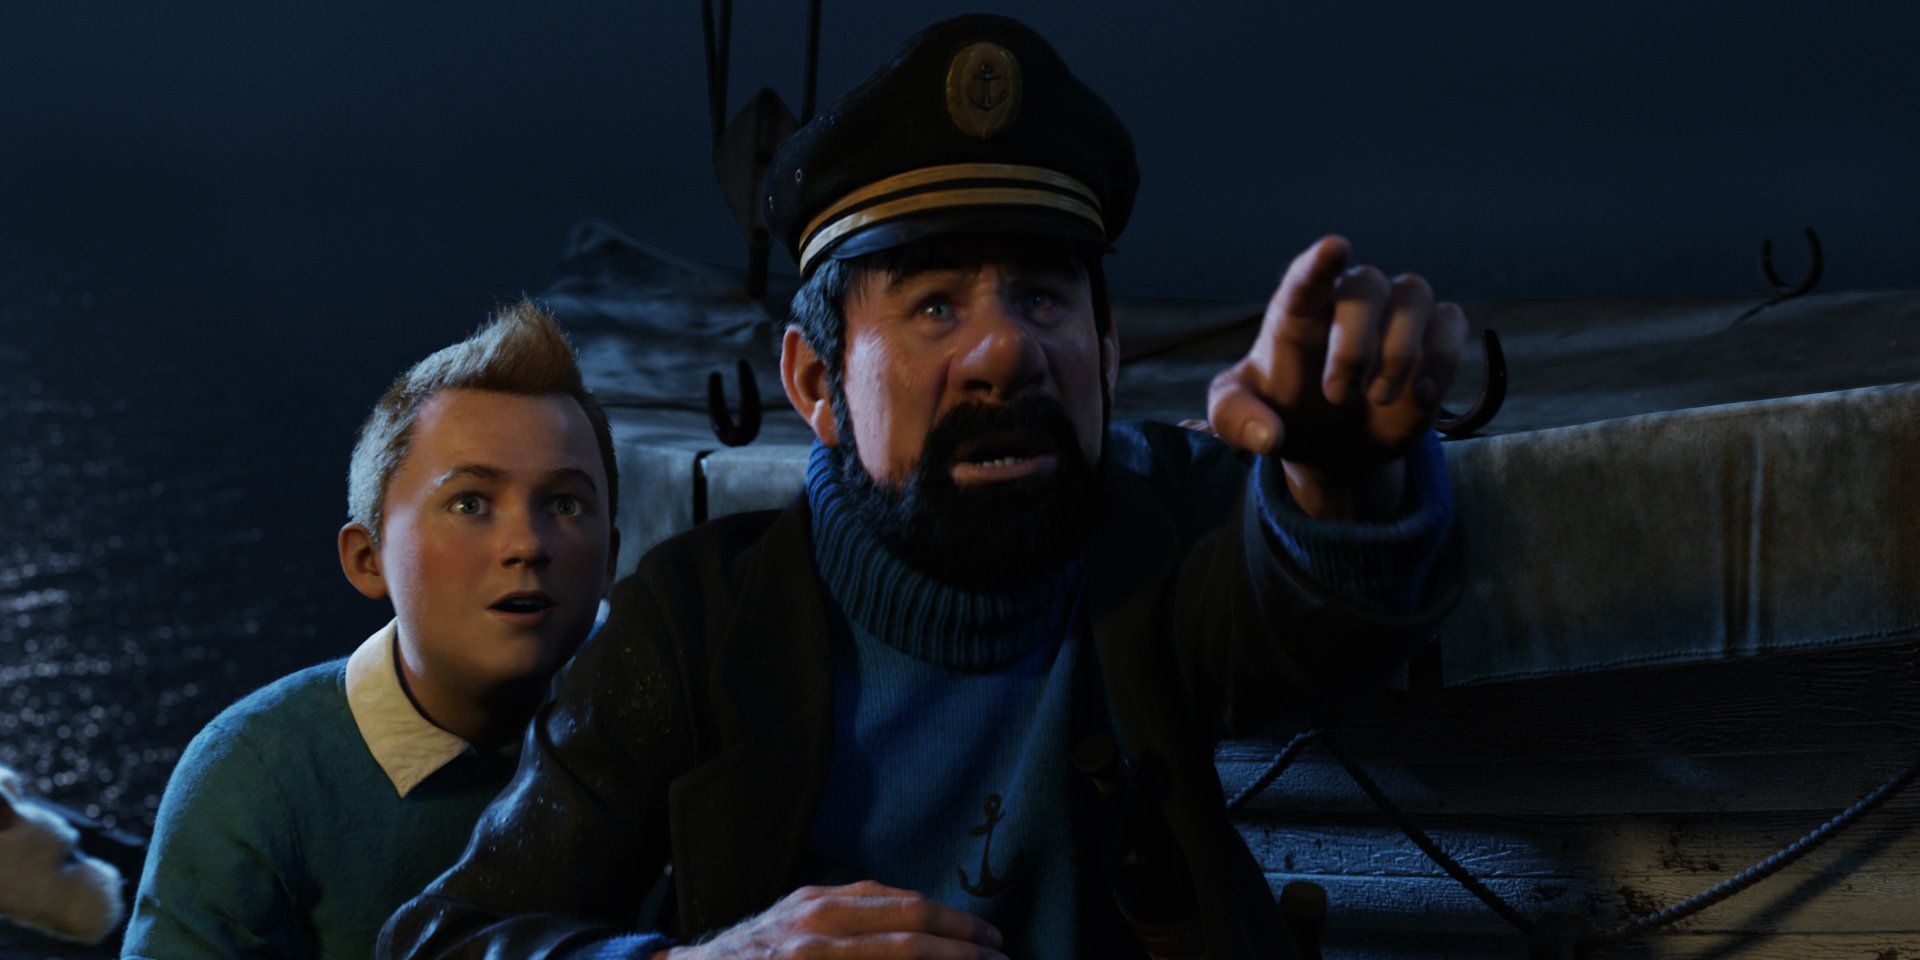 Tintin and Captain Haddock